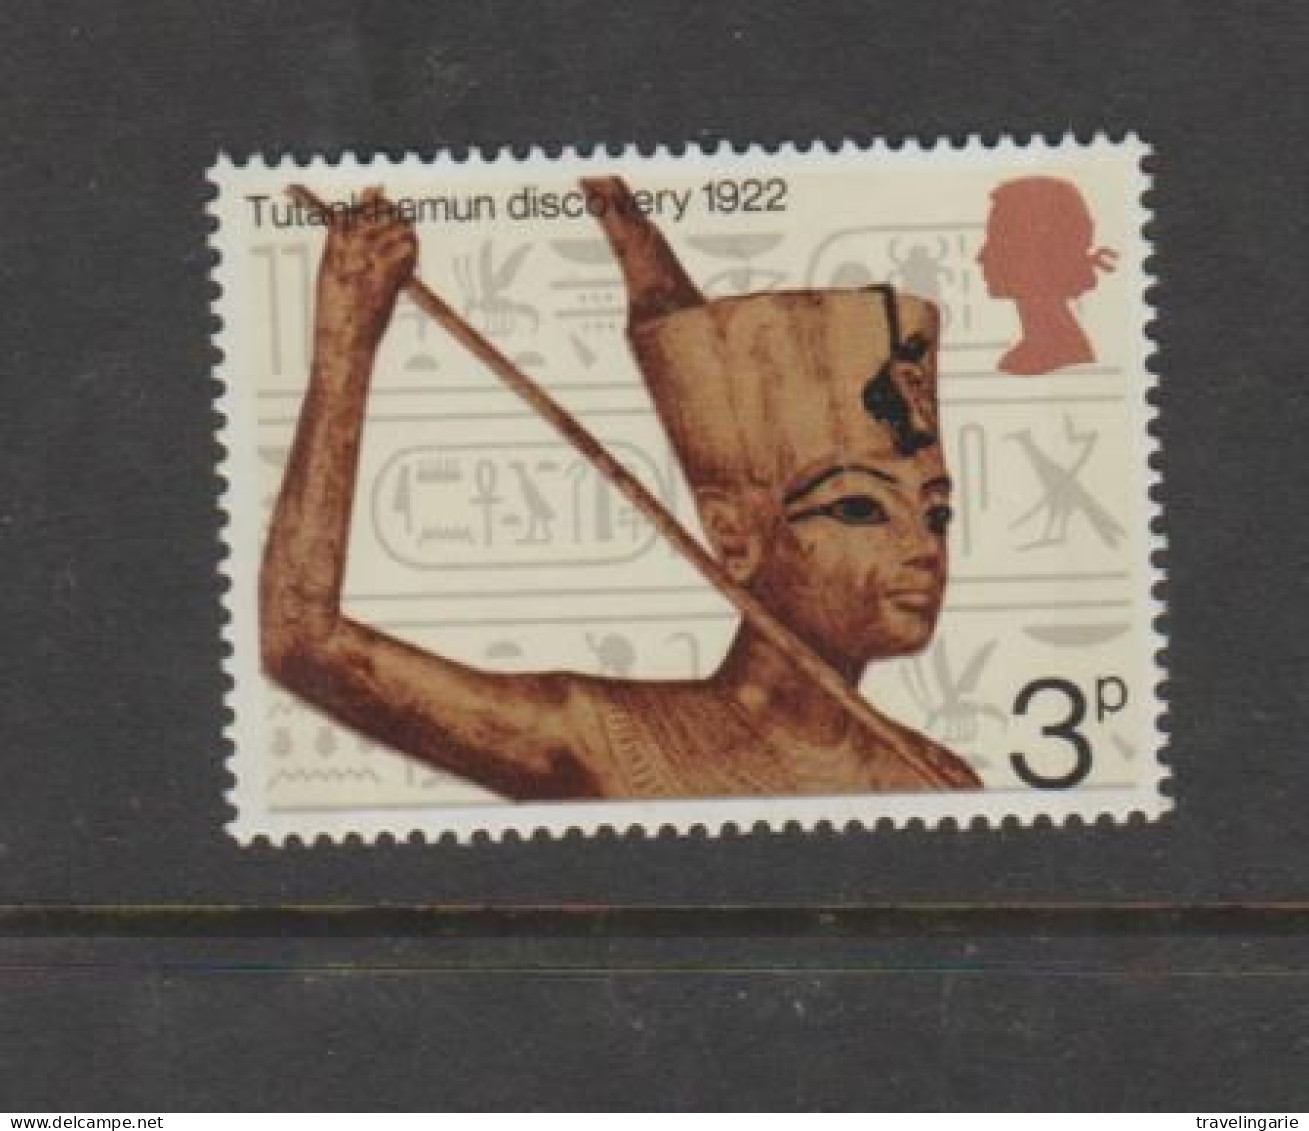 Great Britain 1972 Tutankhamon Discovery 1922 MNH ** - Aegyptologie